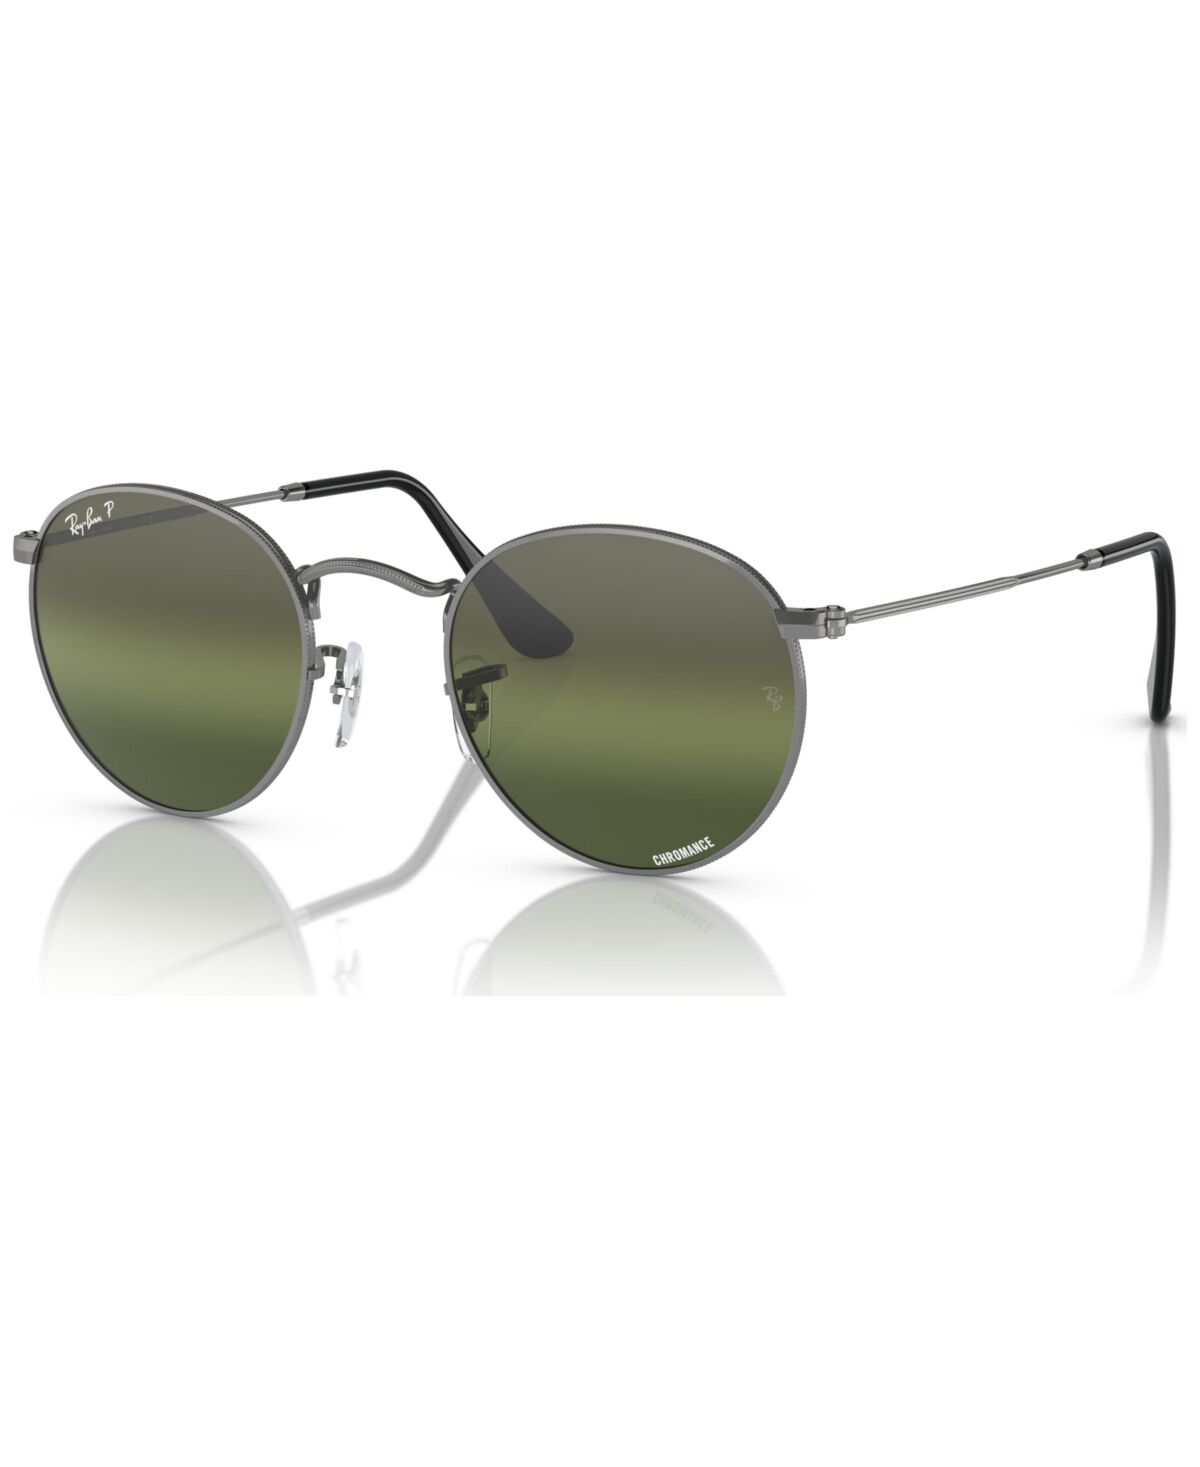 Ray-Ban Men's Round Metal Chromance Polarized Sunglasses, Mirror Gradient RB3447 - Gunmetal